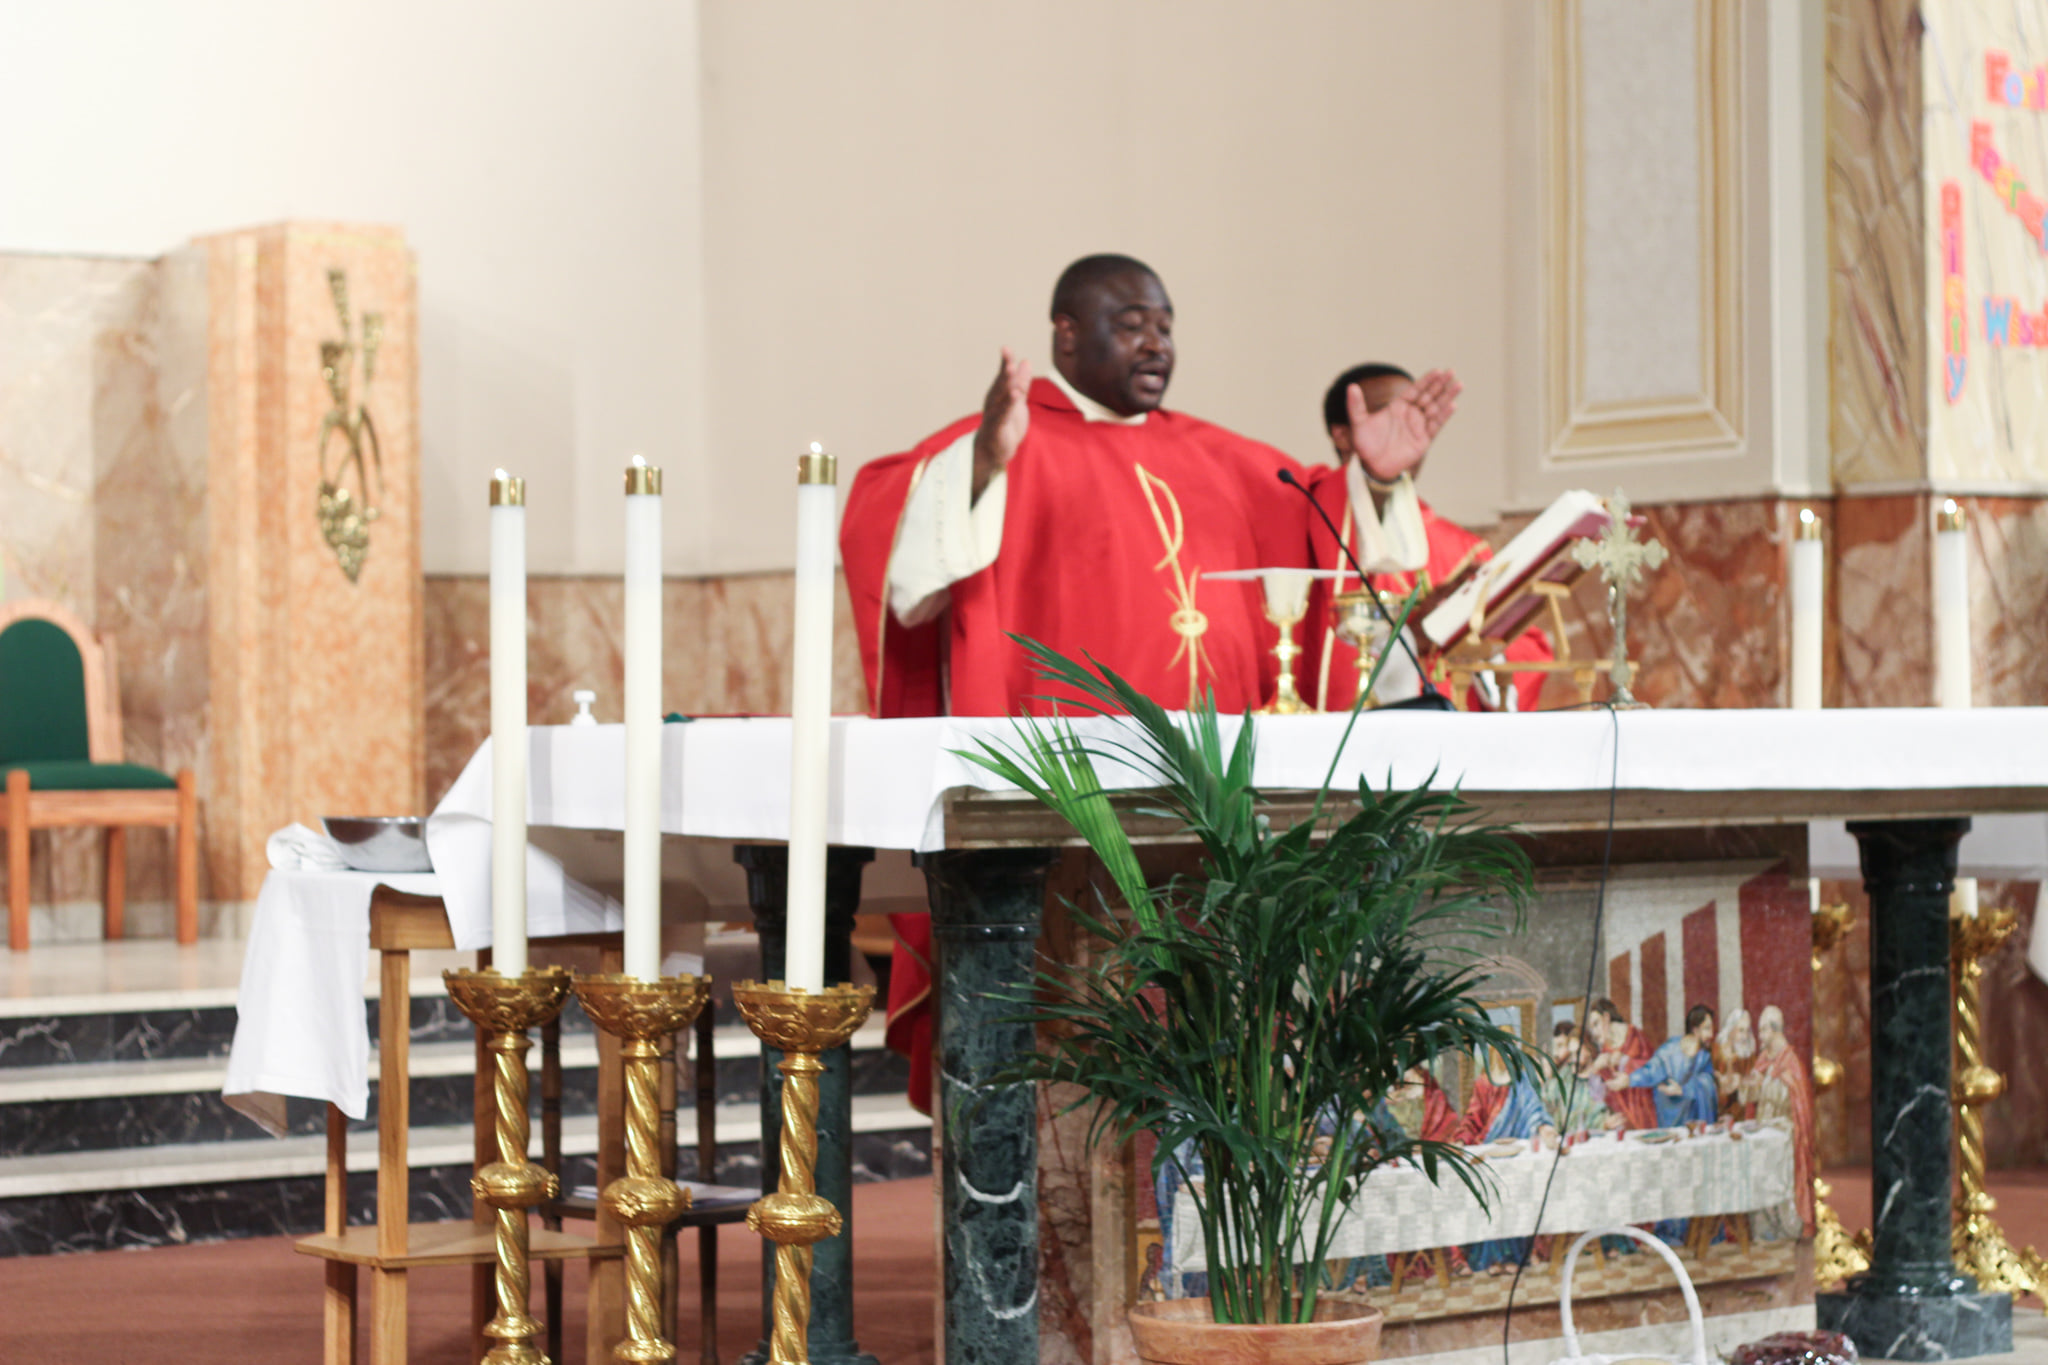 fr. simon celebrating mass